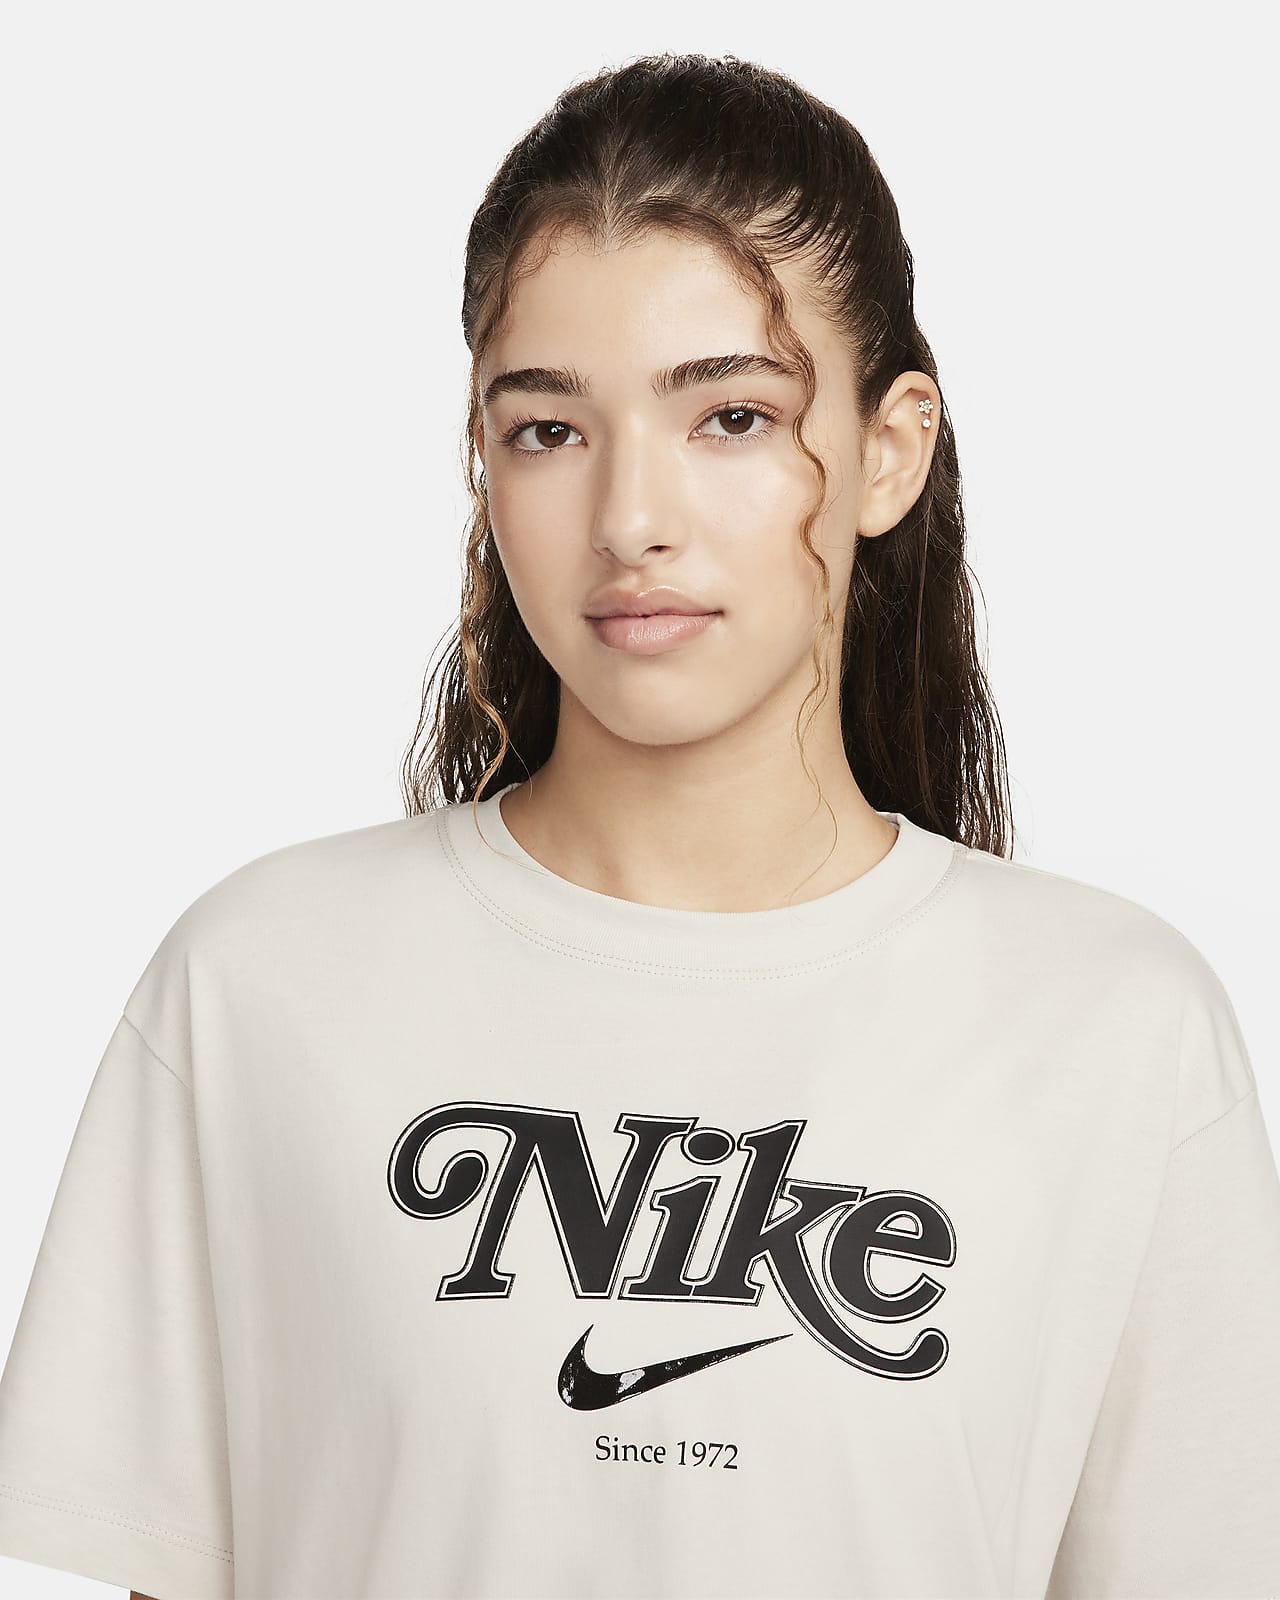 Women's T-Shirts. Sports & Casual Women's Tops. Nike IL